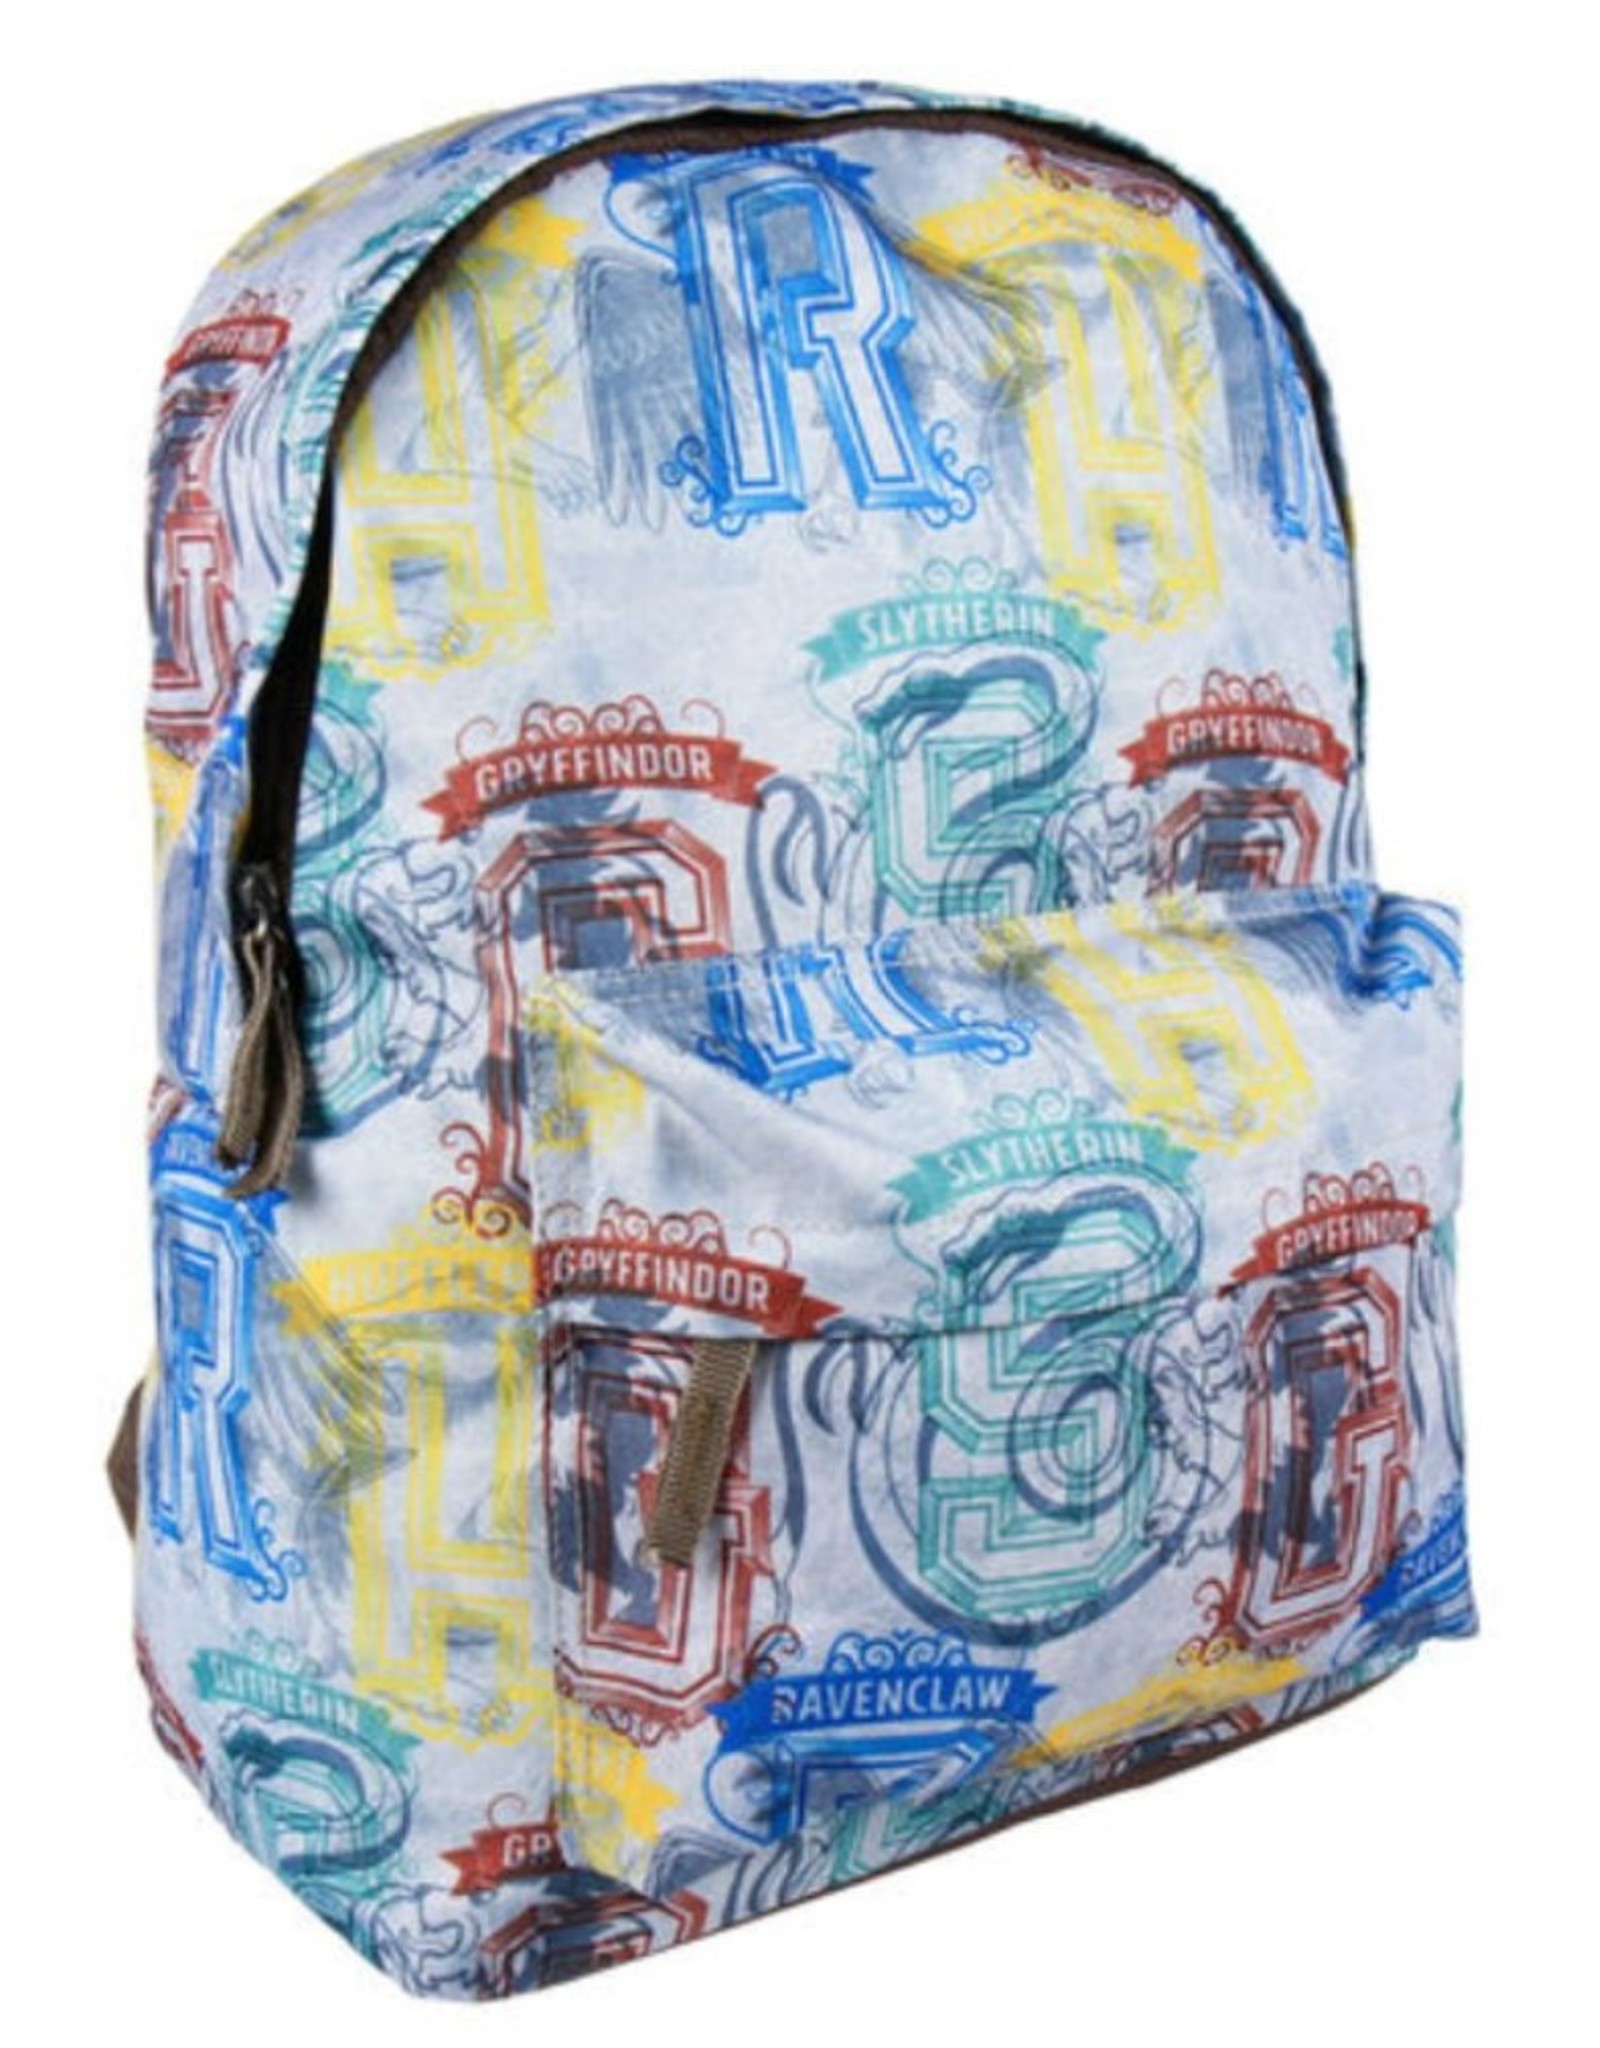 Harry Potter Harry Potter bags - Harry Potter fantasy backpack 41cm